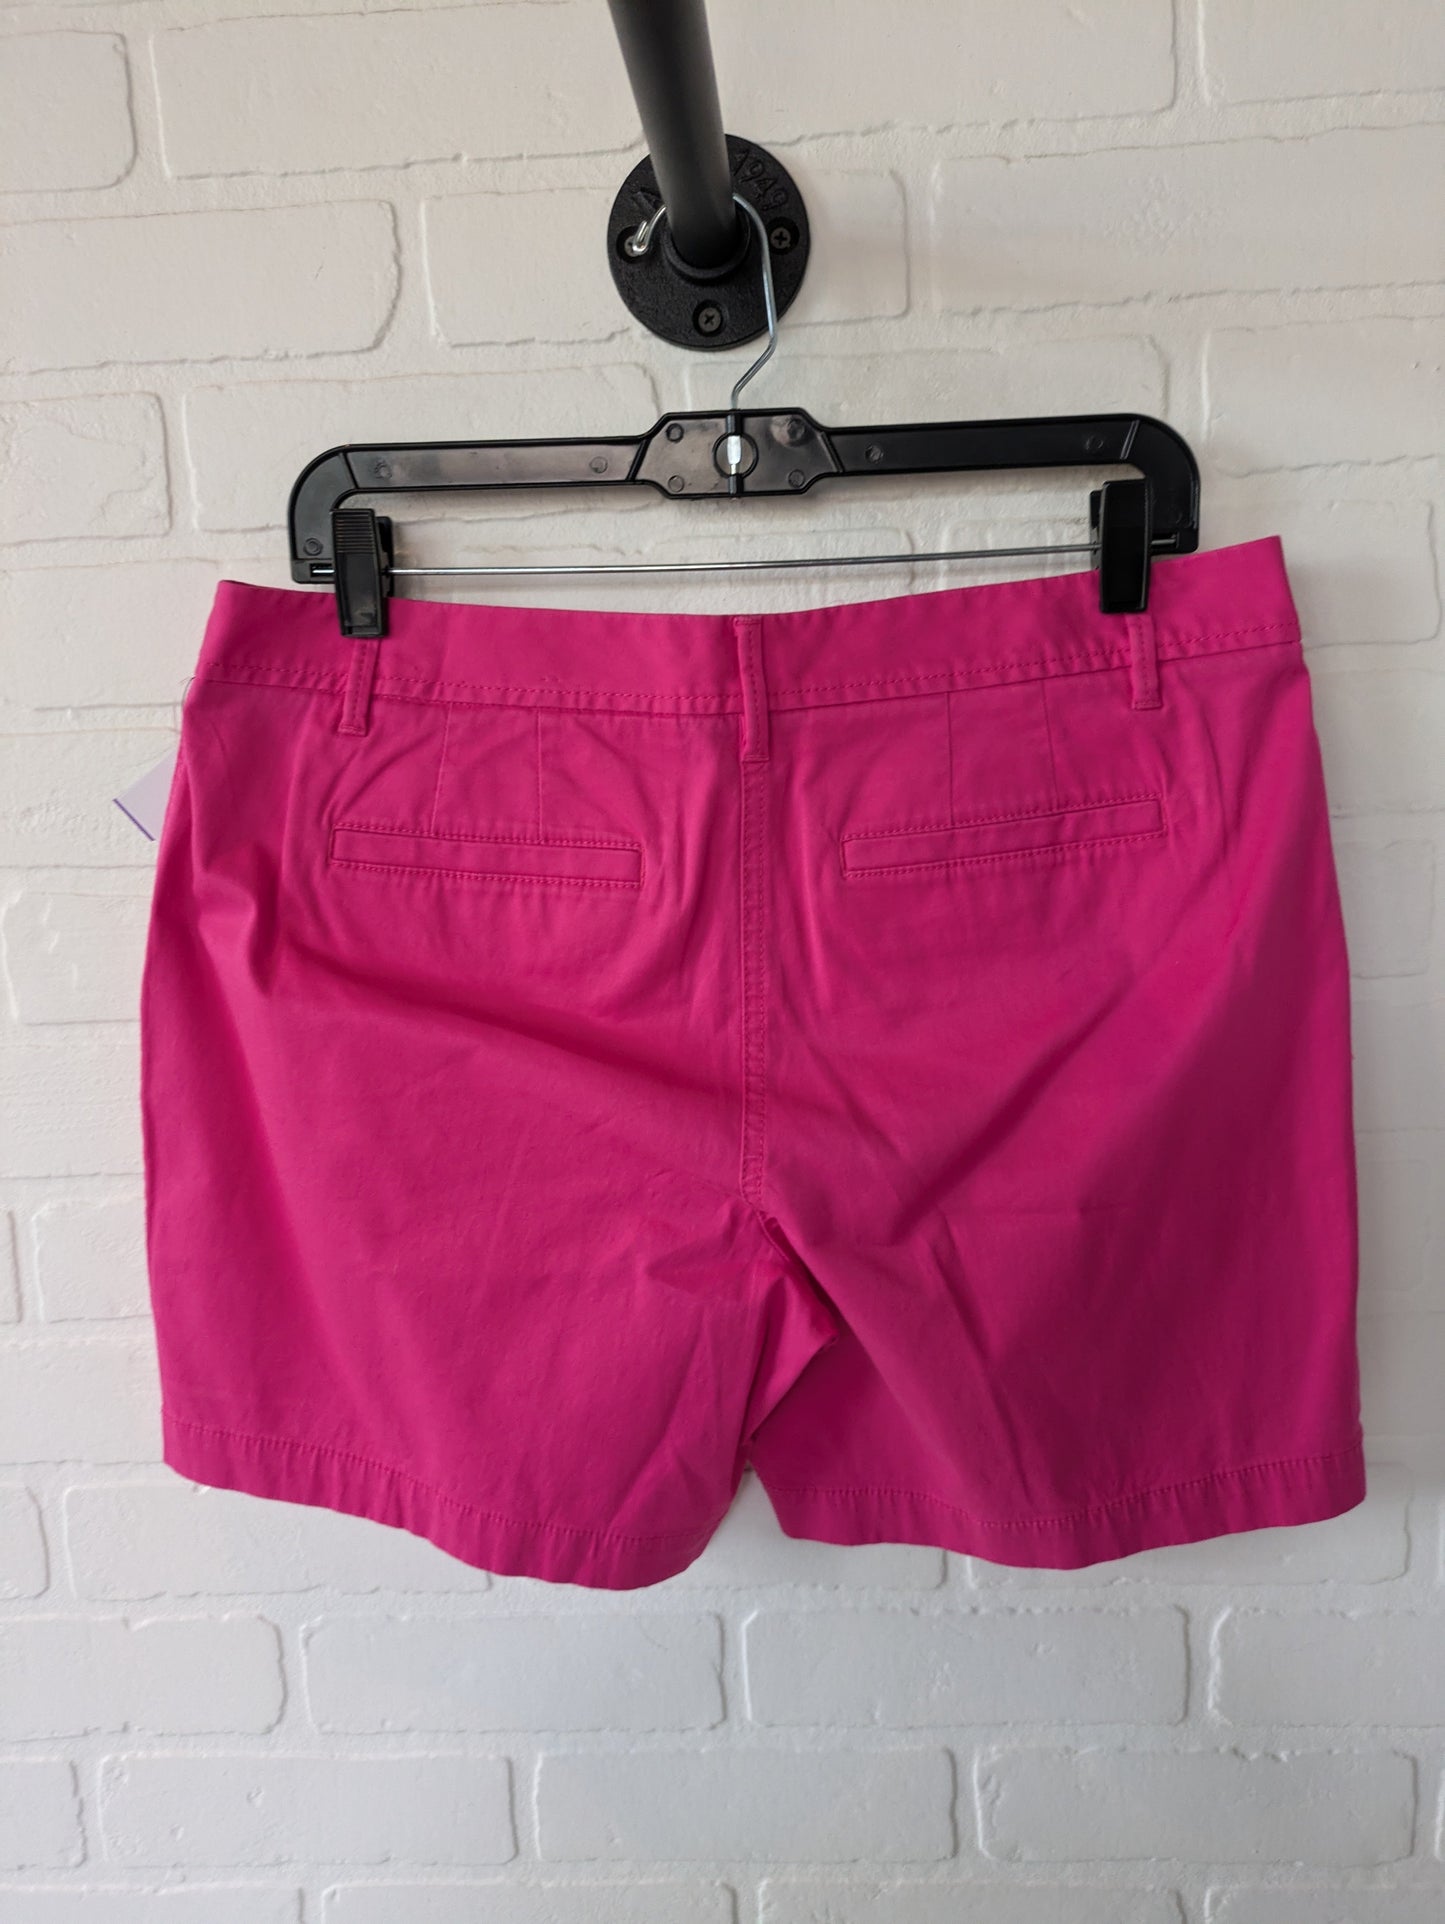 Pink Shorts Talbots, Size 10petite